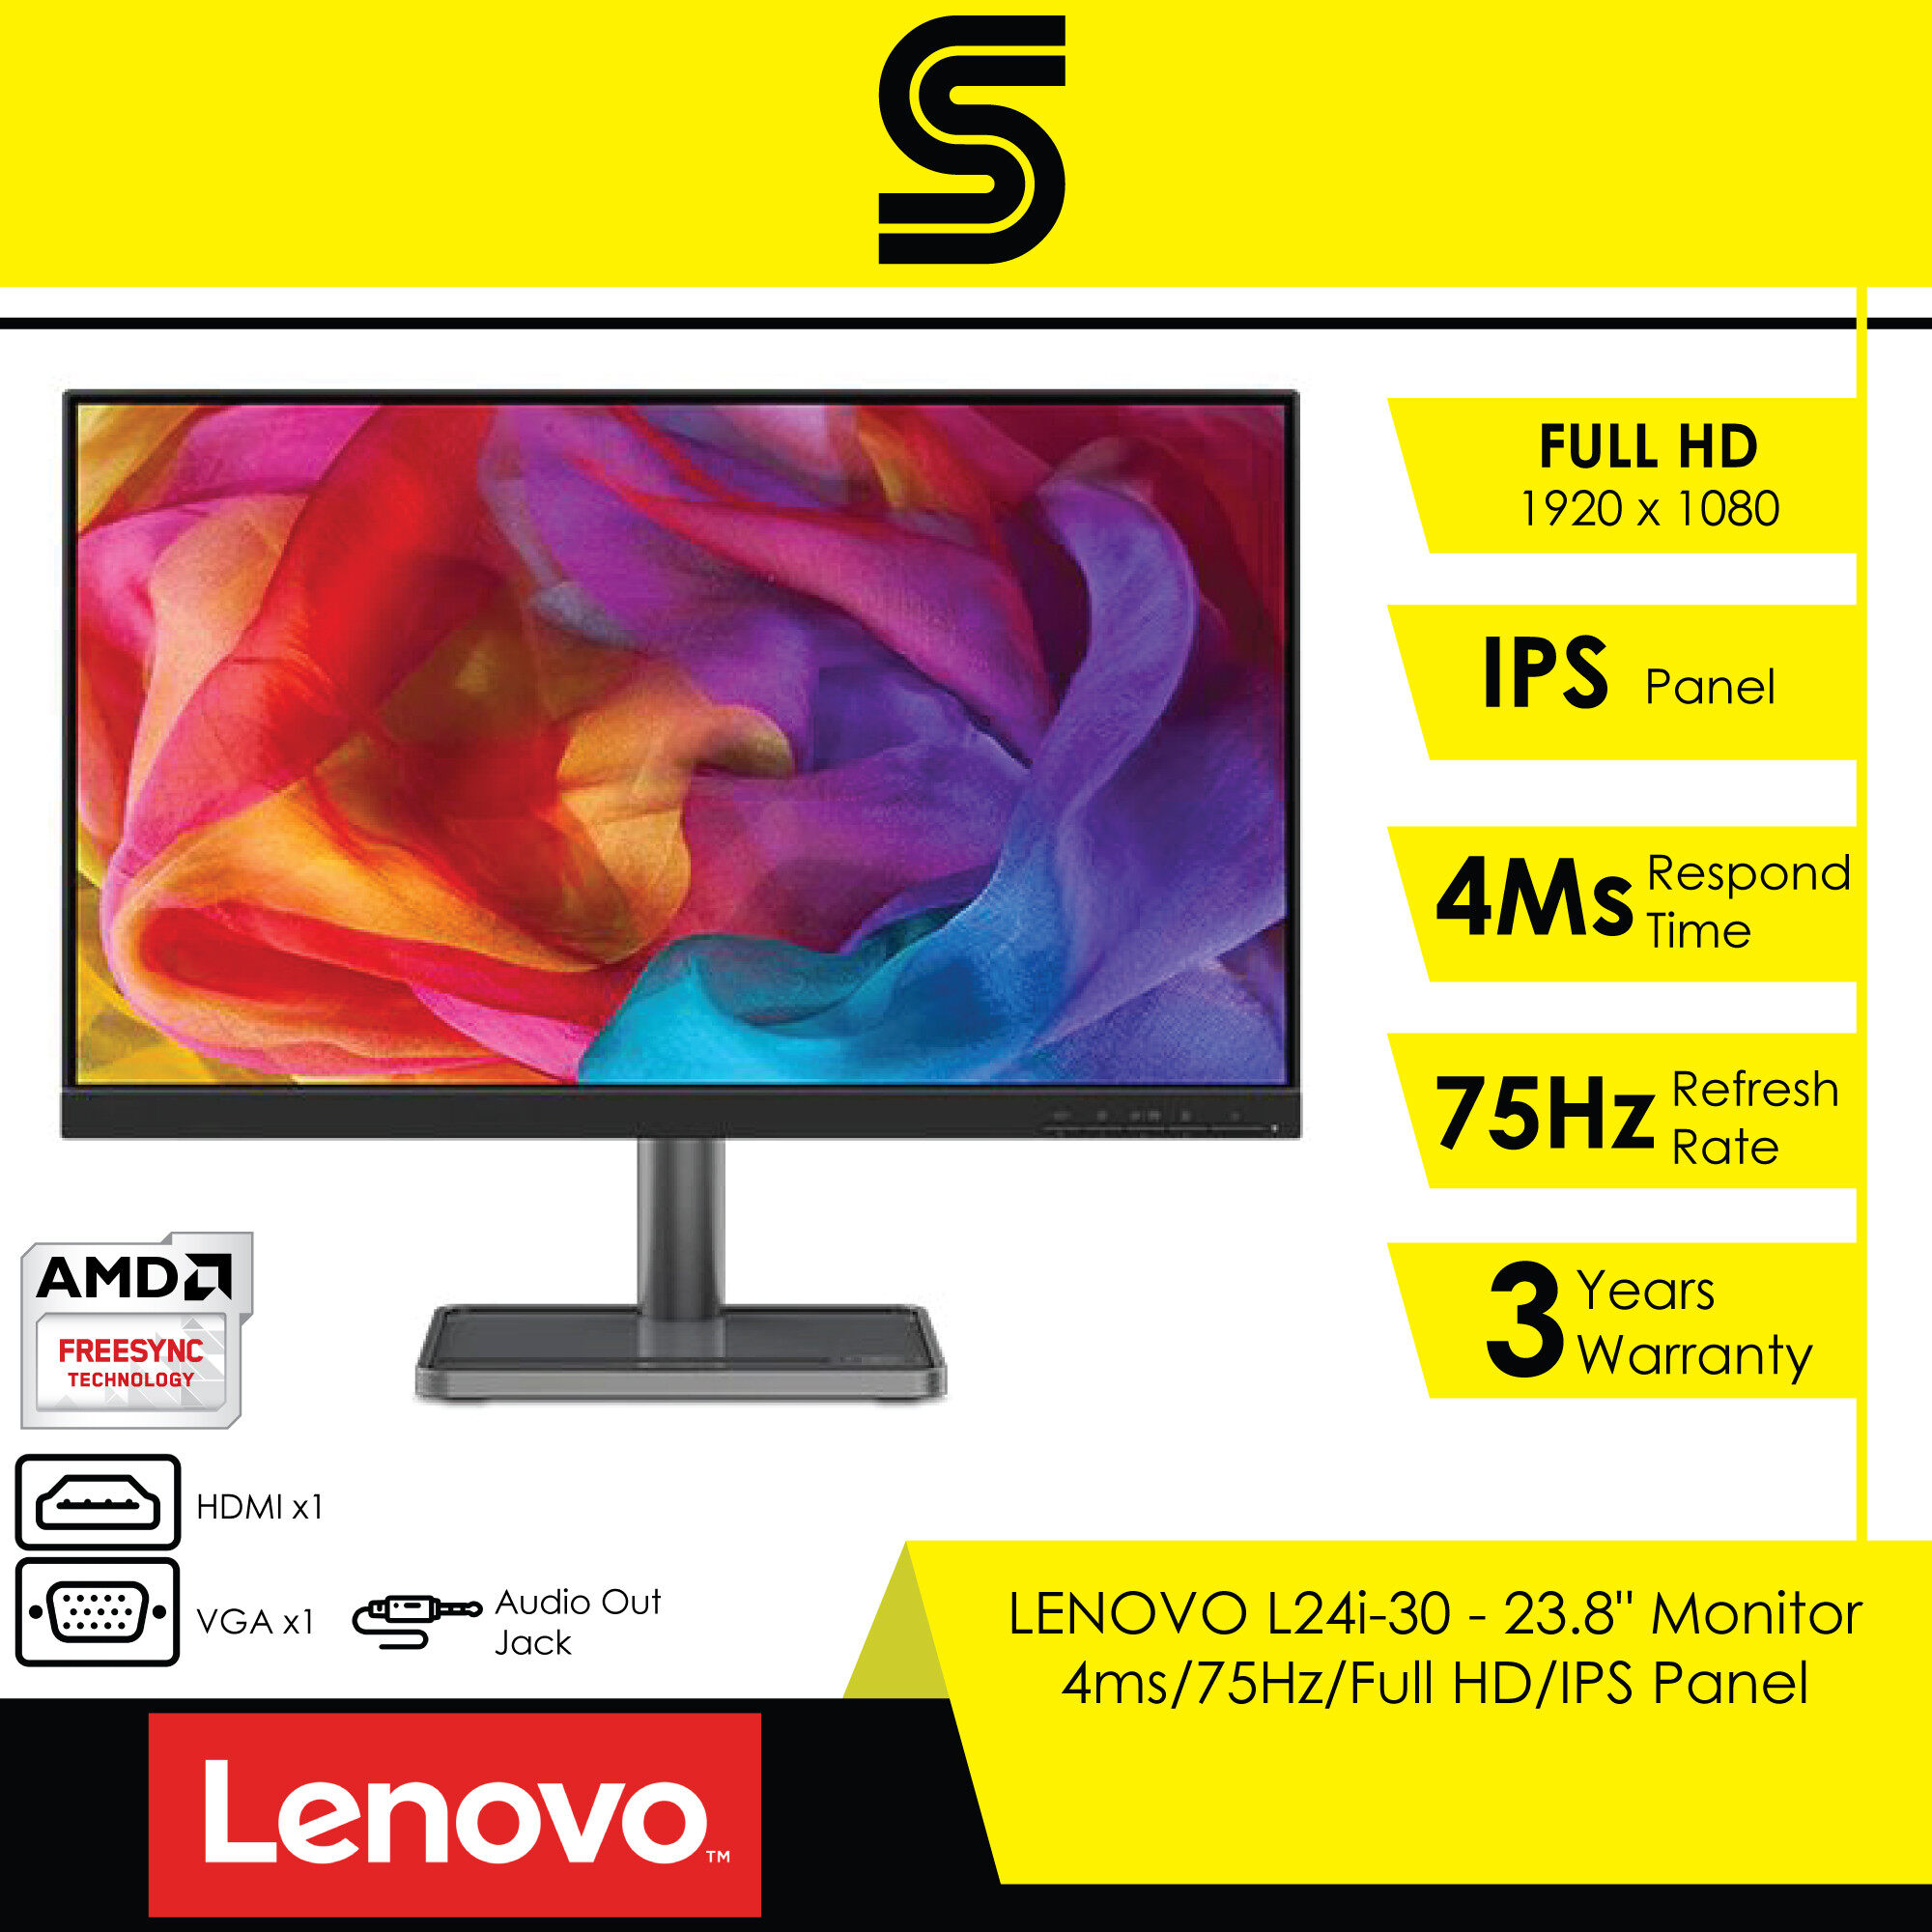 LENOVO L24i-30 - 23.8" Monitor - 4ms/75Hz/Full HD/IPS Panel